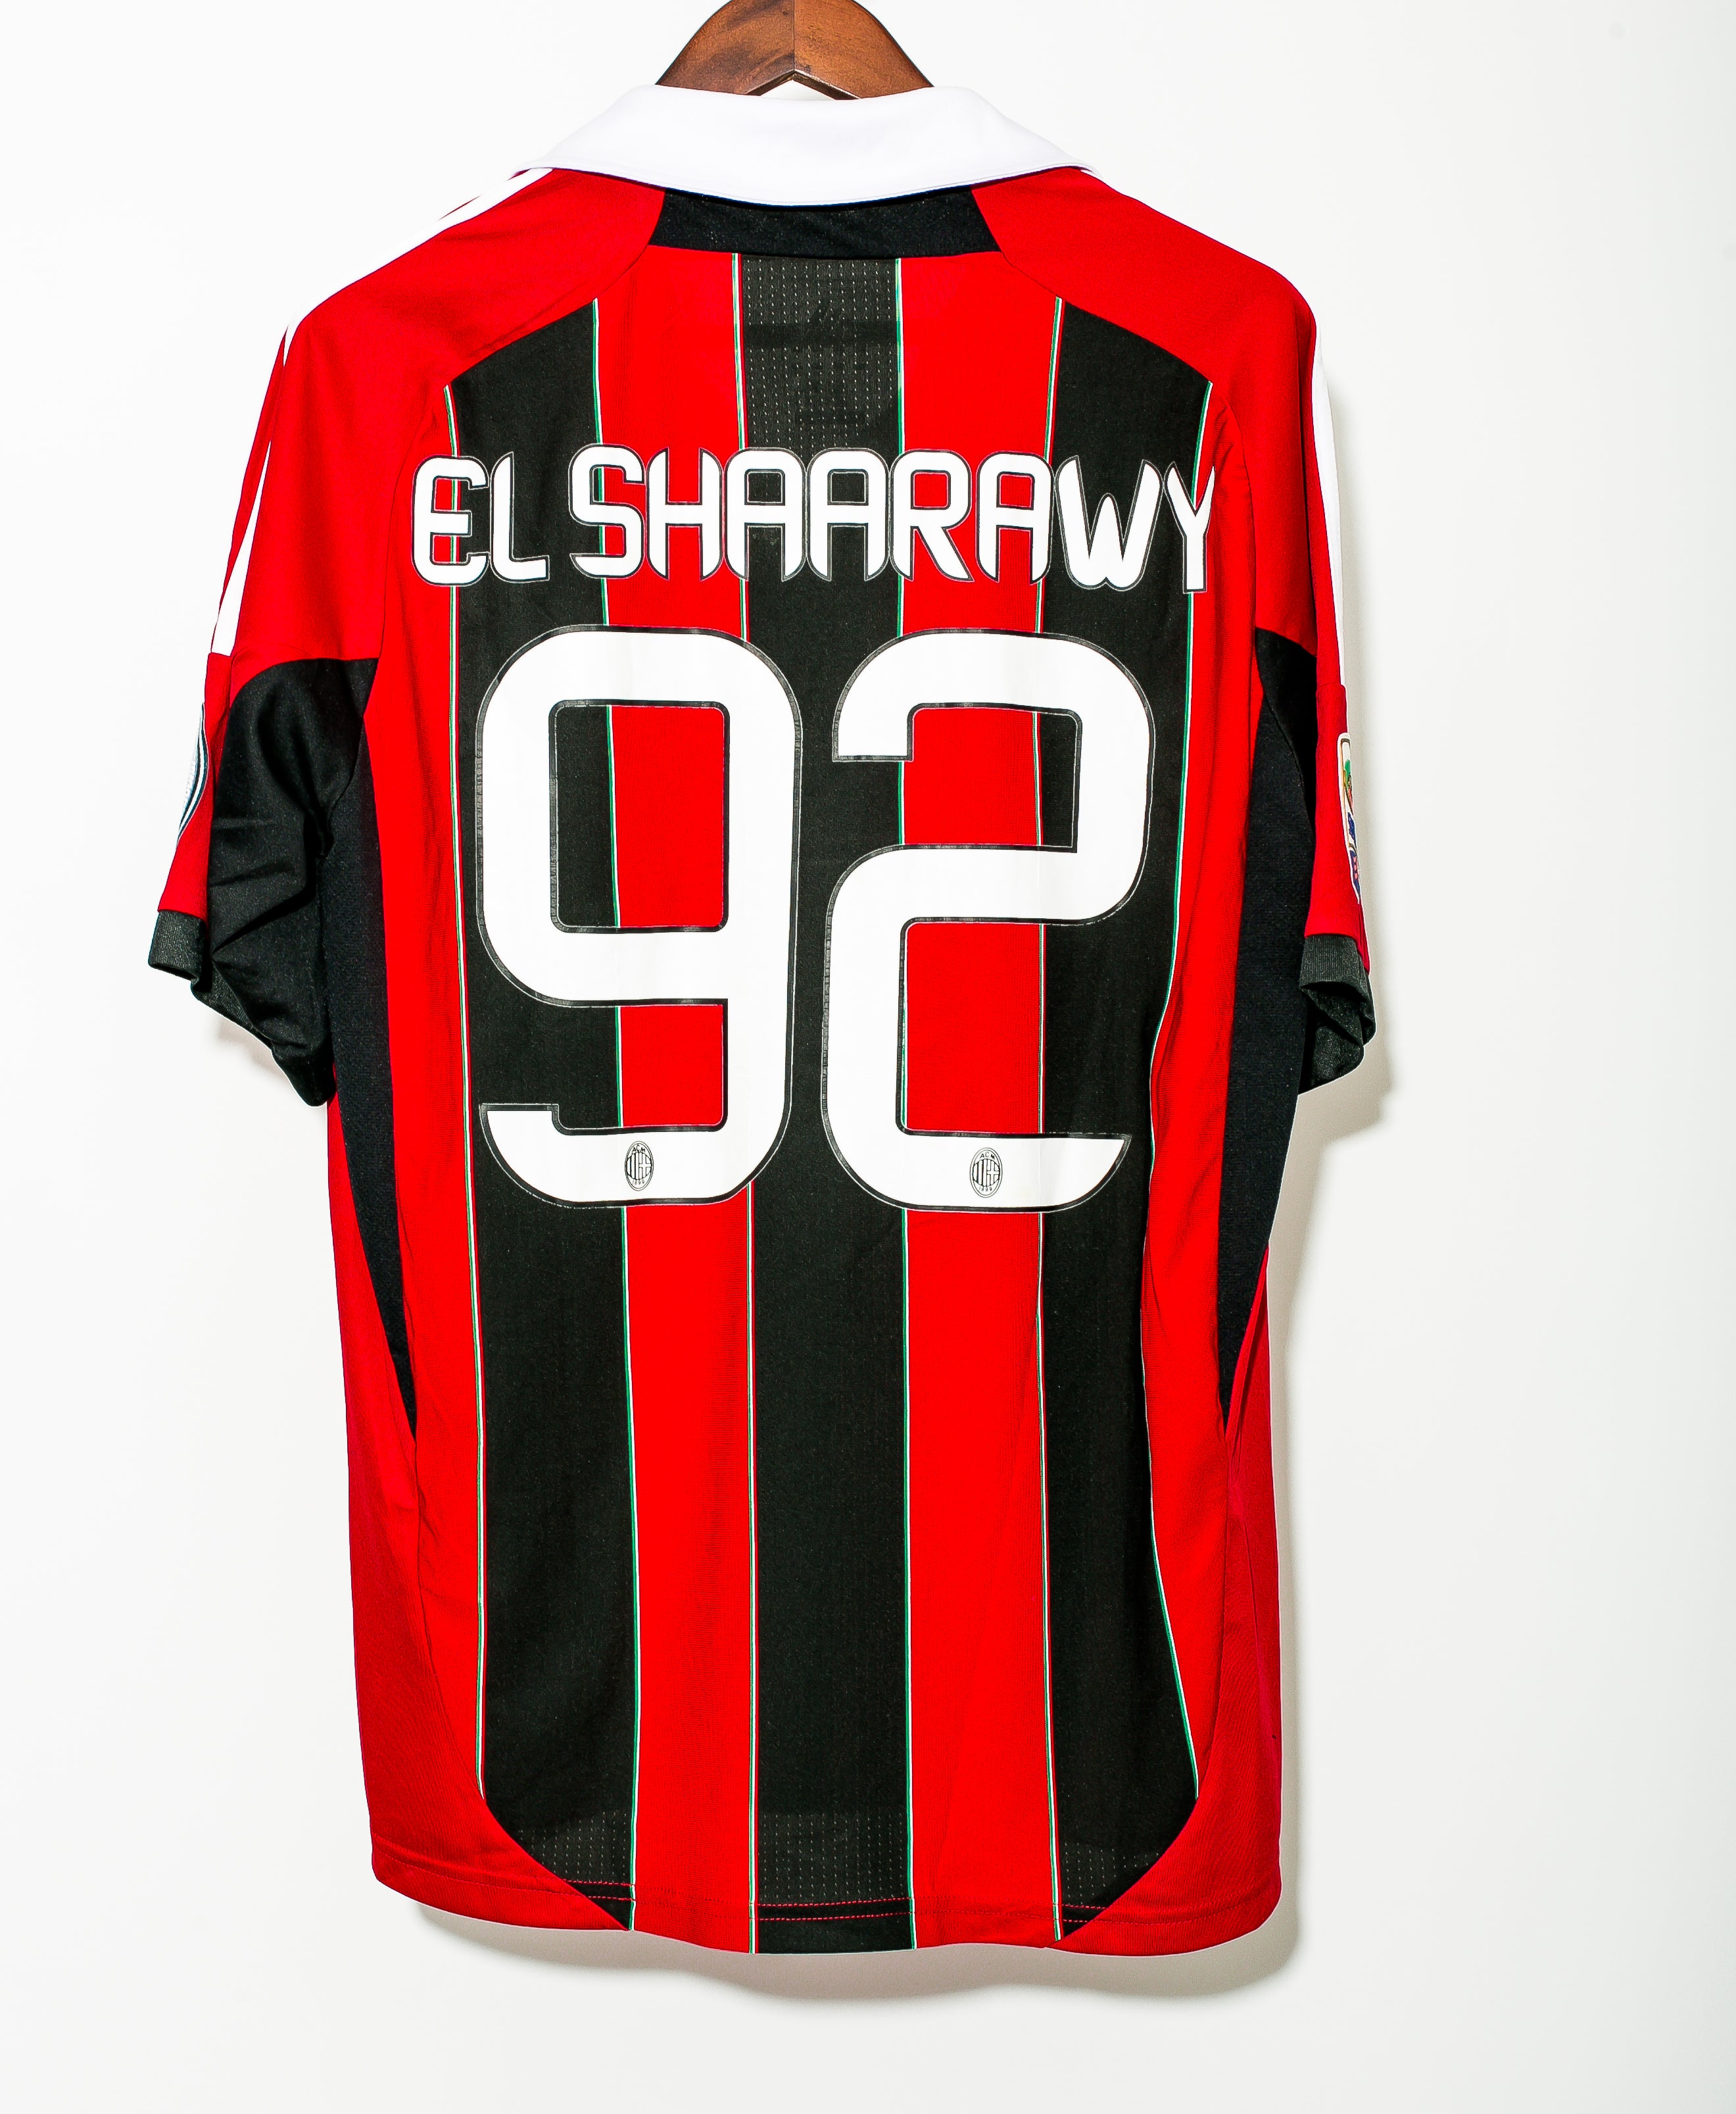 Home jersey Milan AC 2012/2013 El Shaarawy - Milan AC - Serie A - Fans